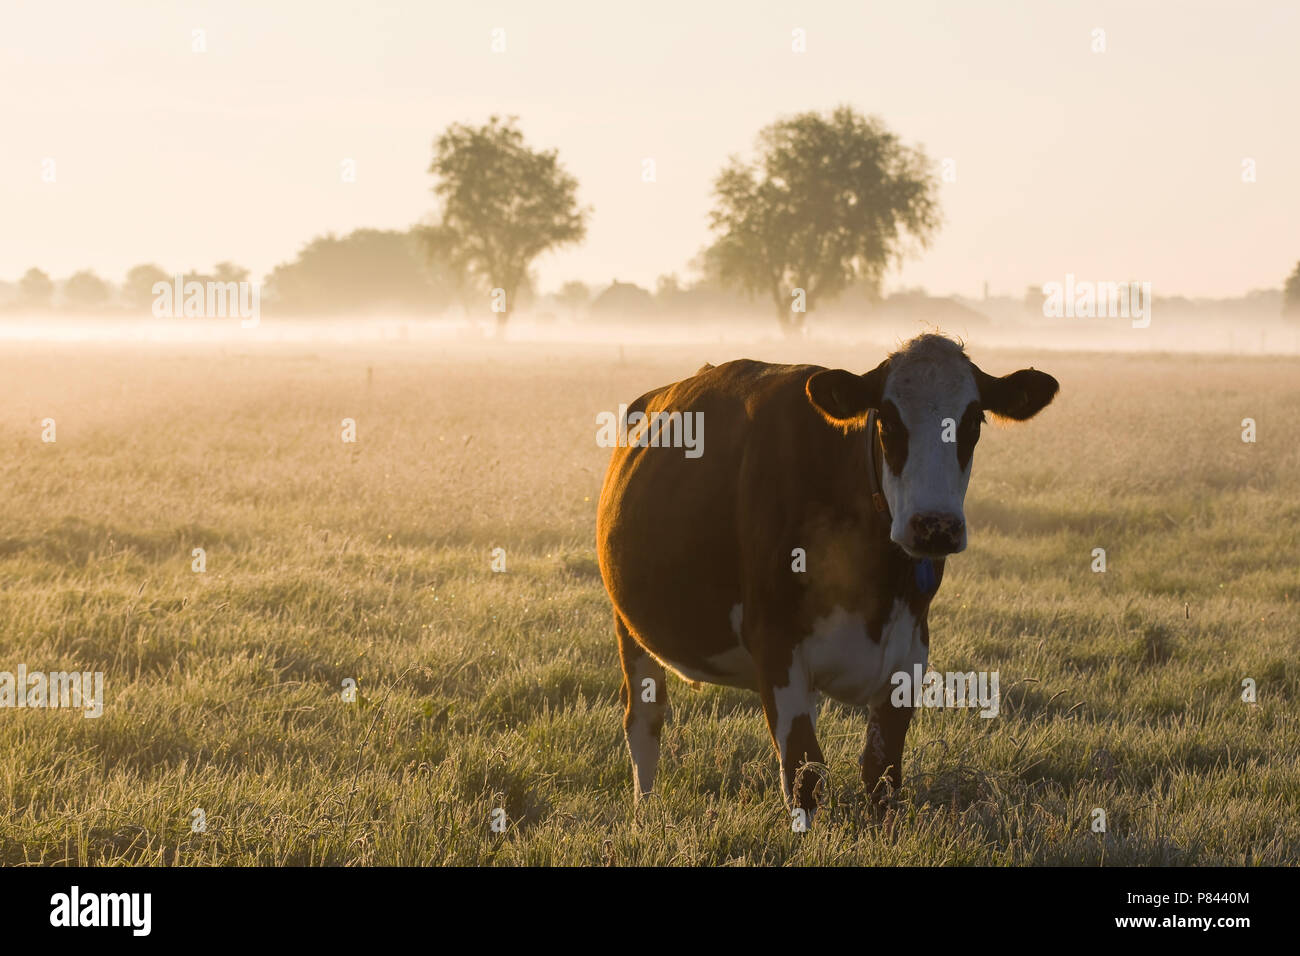 Koe dans weiland ; Cow in meadow Banque D'Images